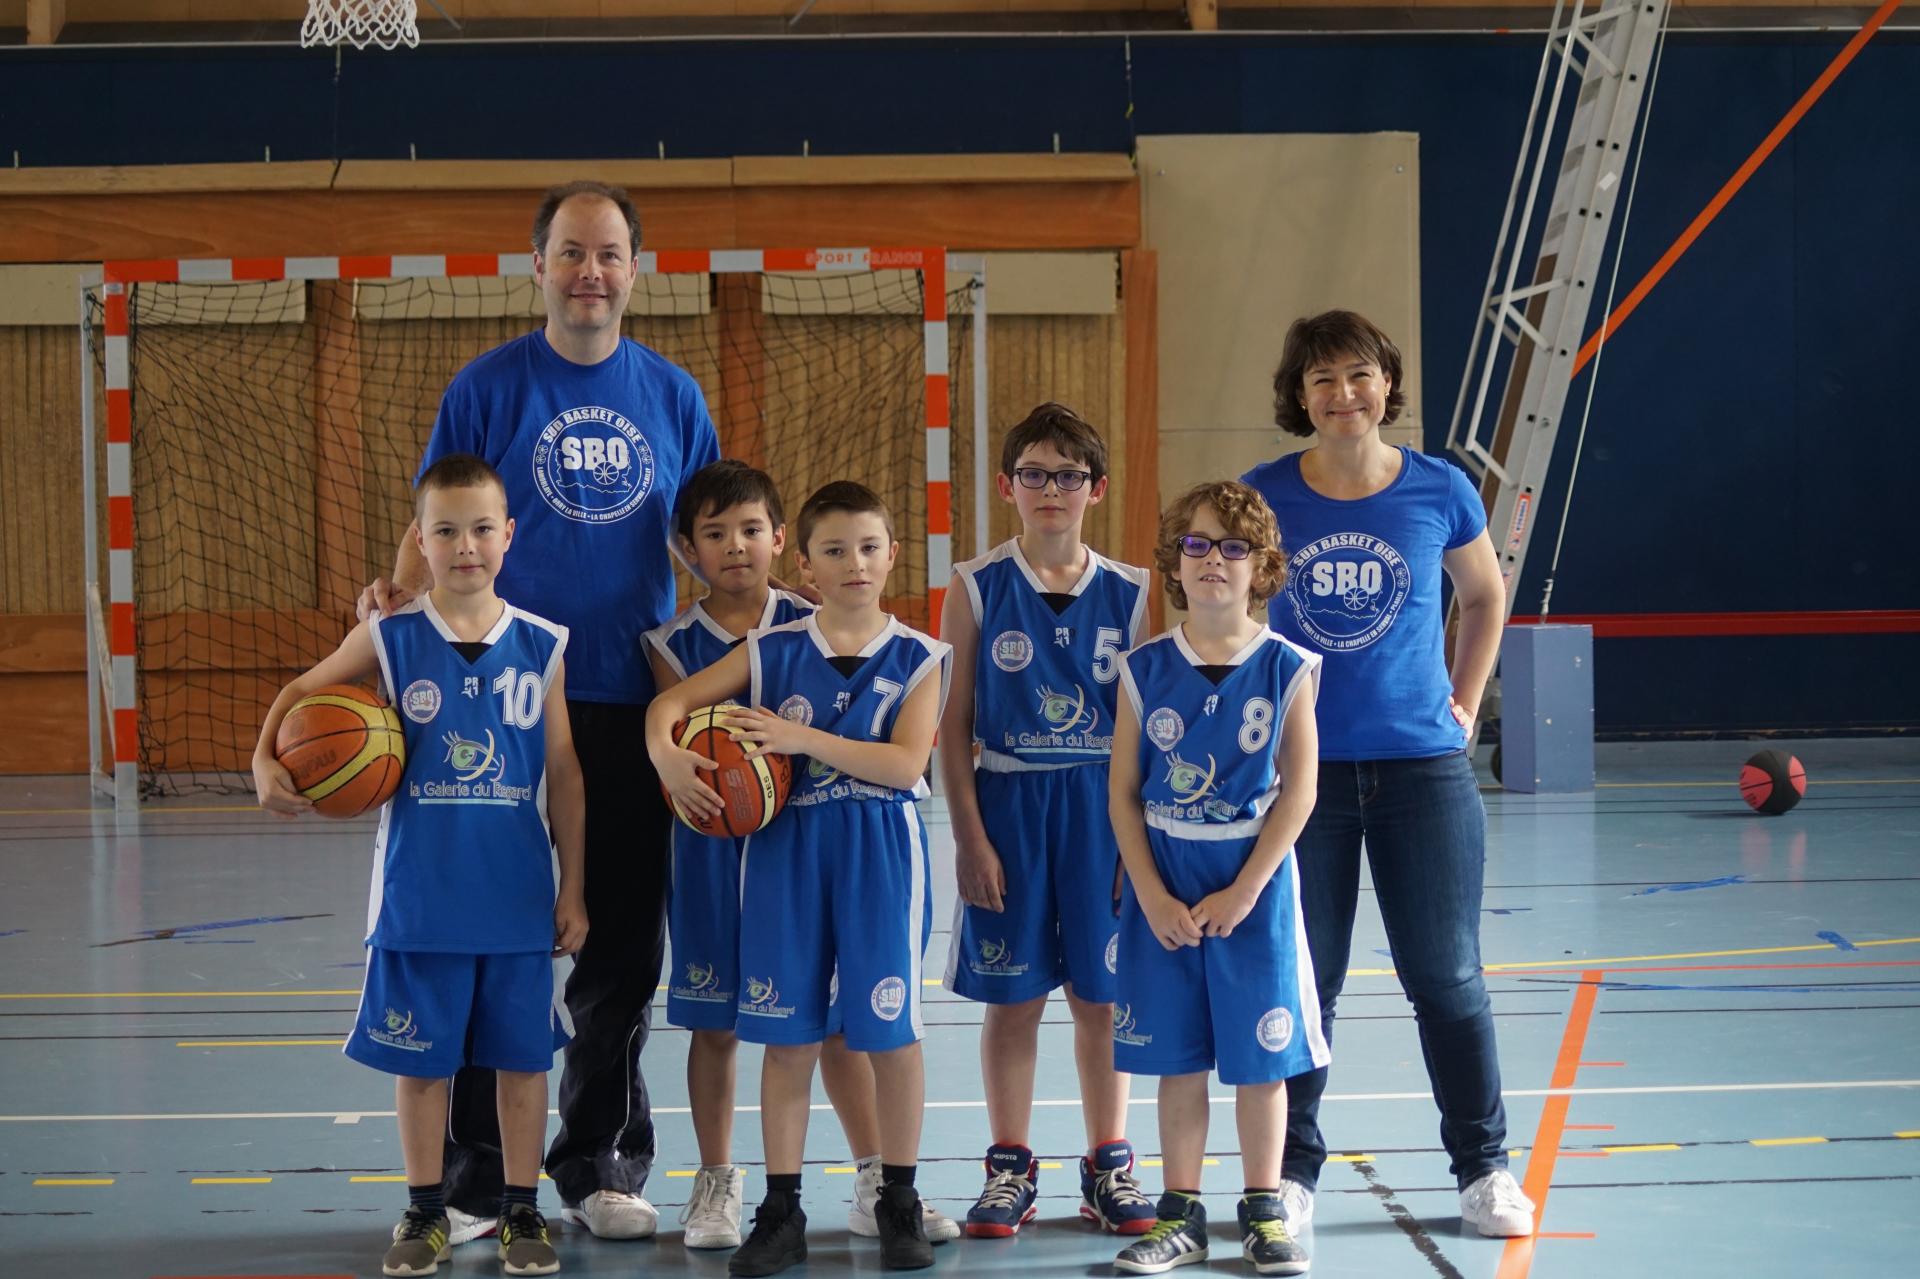 U11 Sud Basket Oise Saison 2018-2019